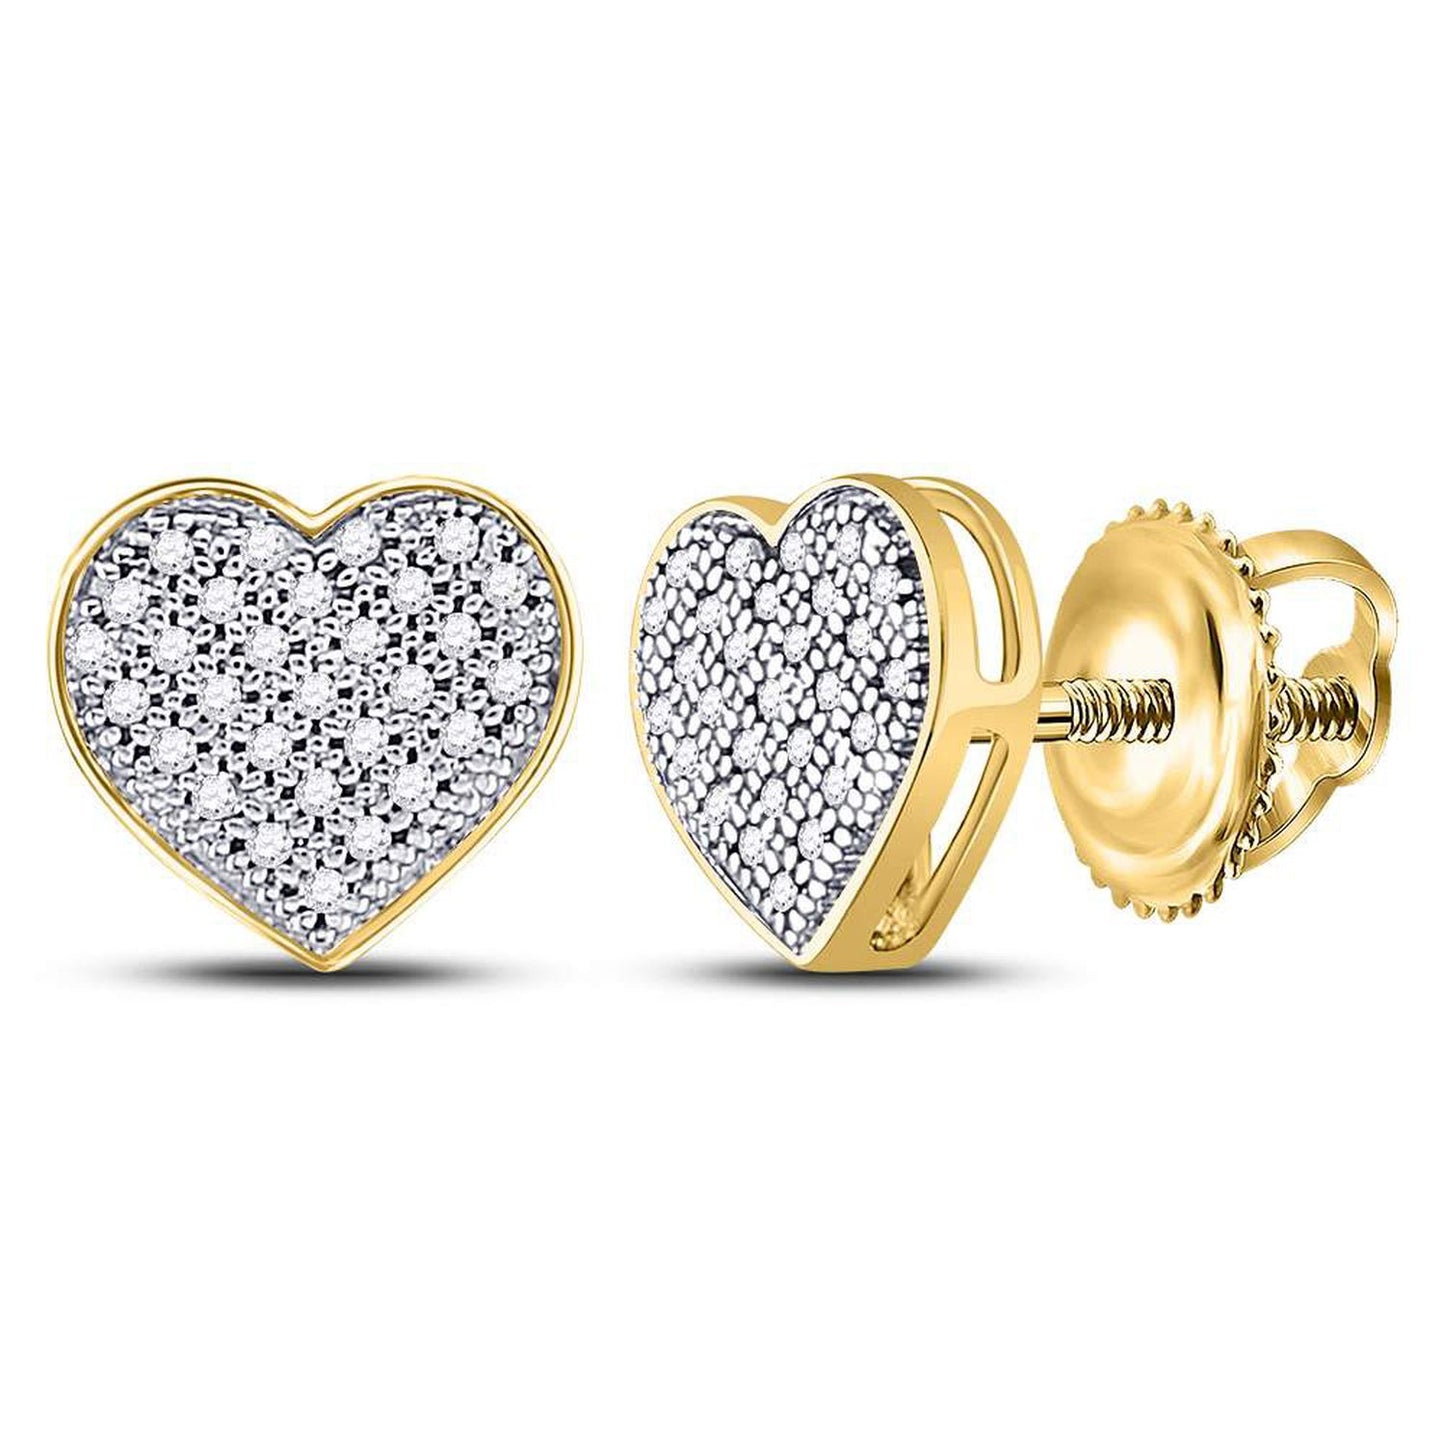 GND 10kt Yellow Gold Womens Round Diamond Heart Earrings 1/6 Cttw